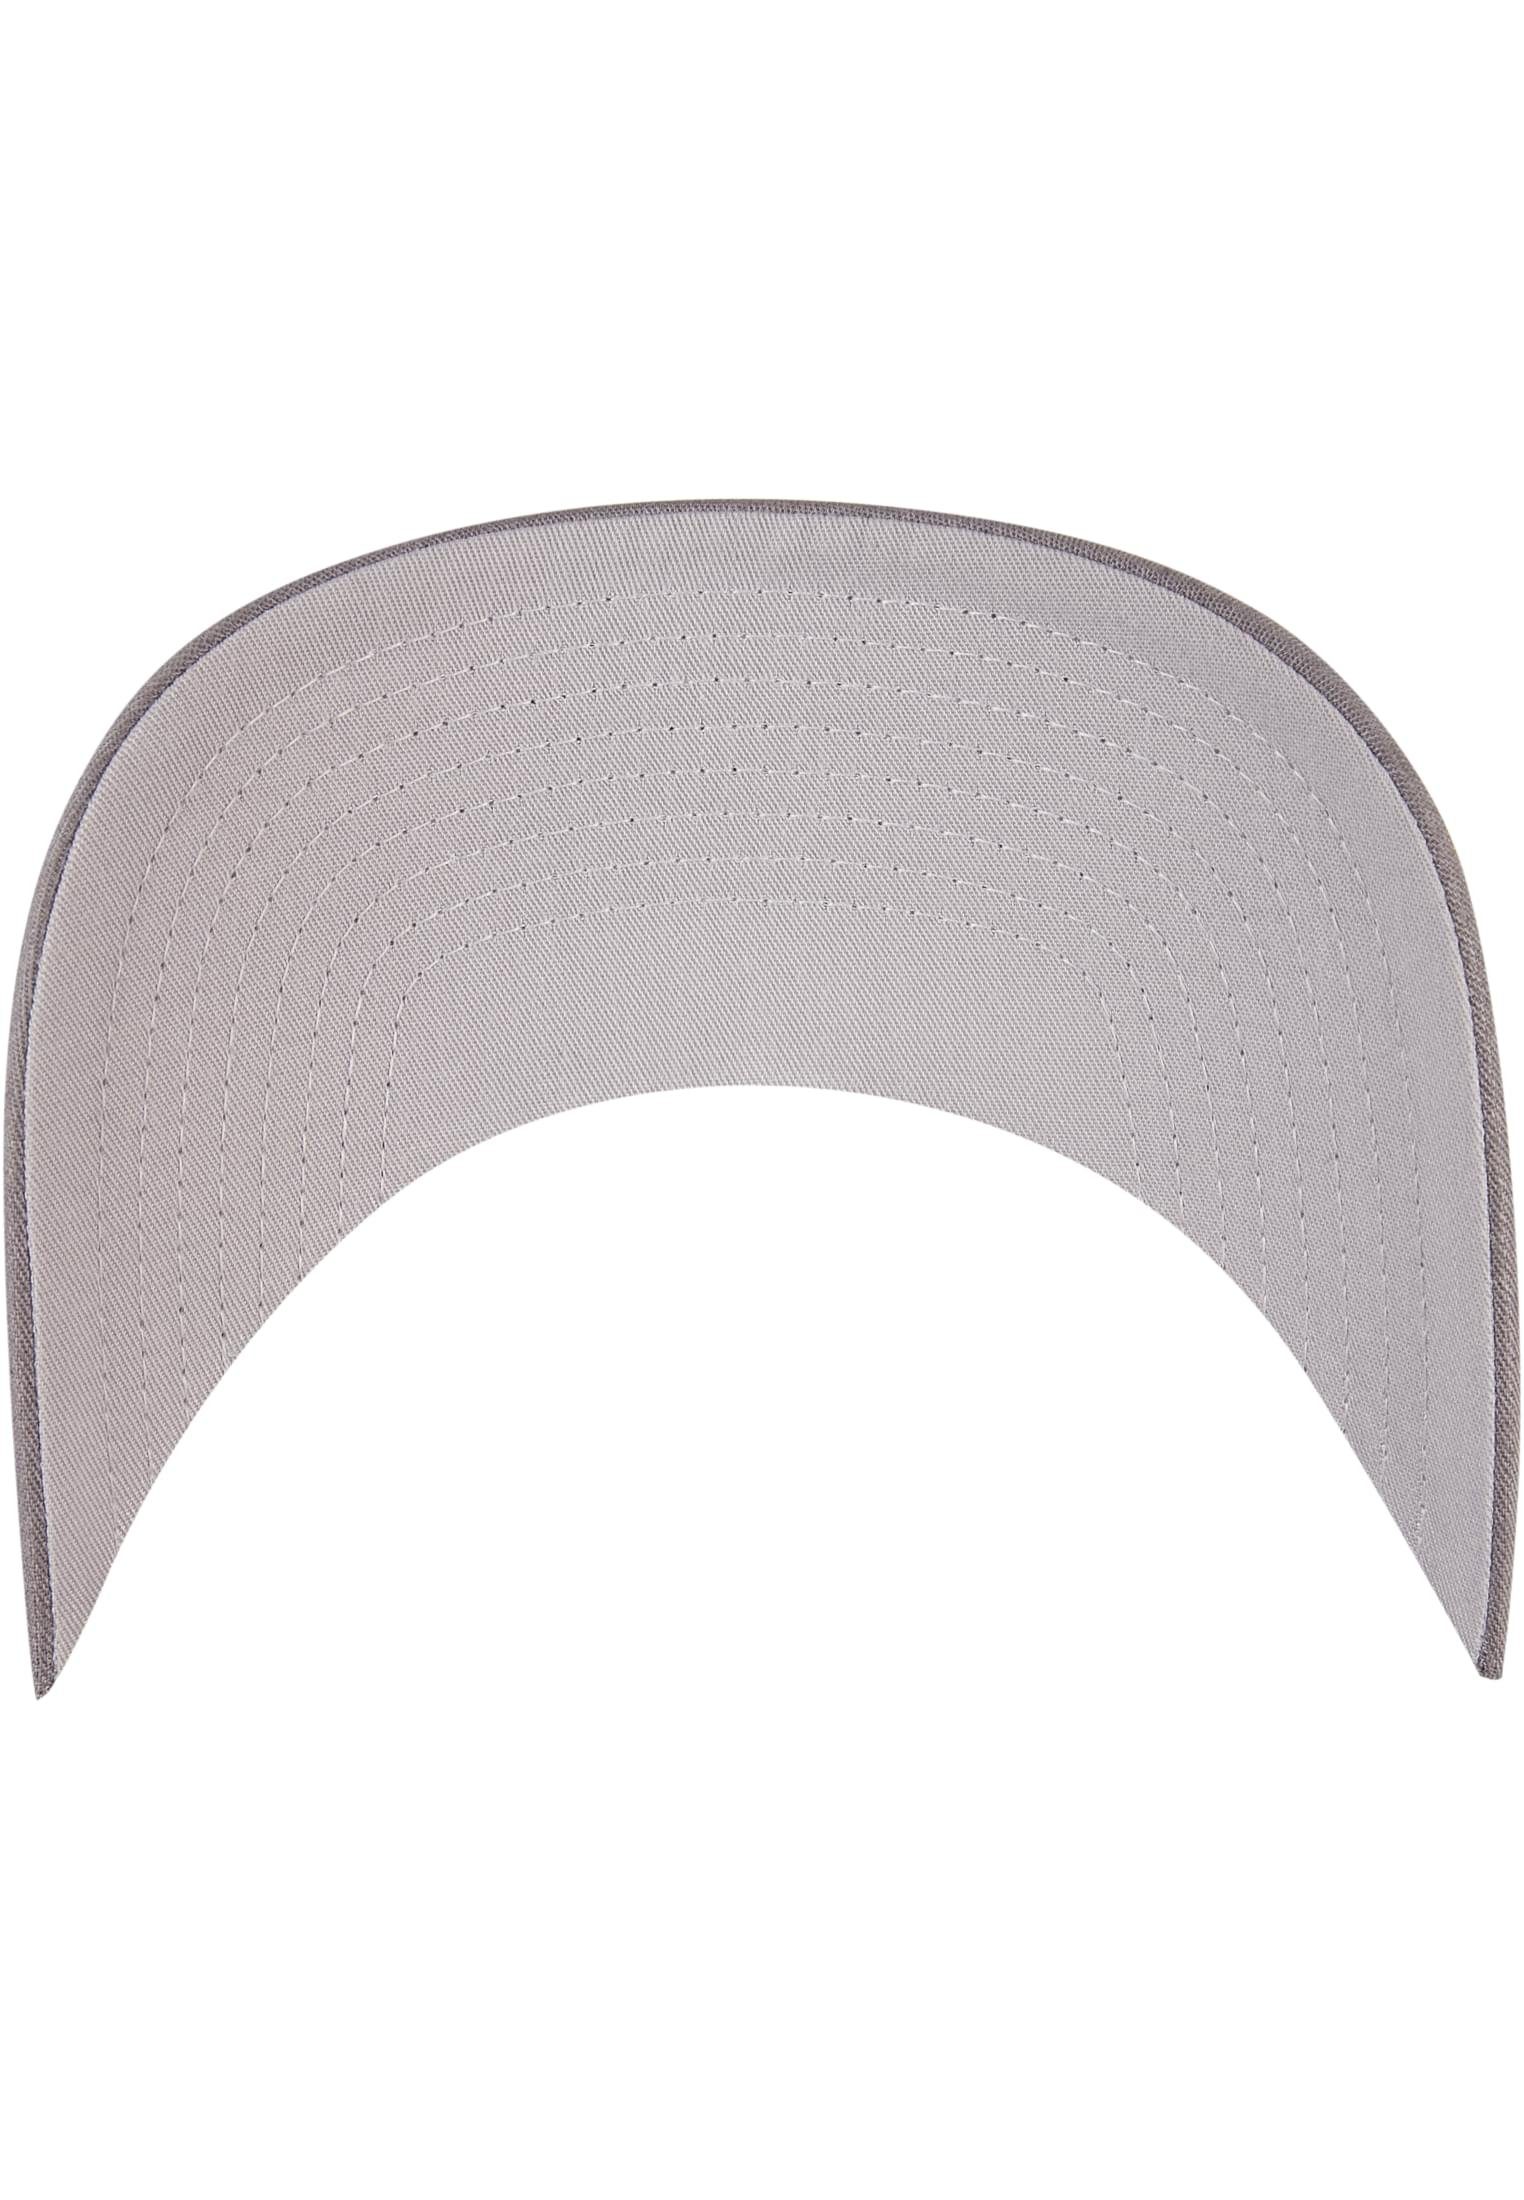 Flexfit Flex grey TWILL COTTON CAP V-FLEXFIT® Cap Accessoires